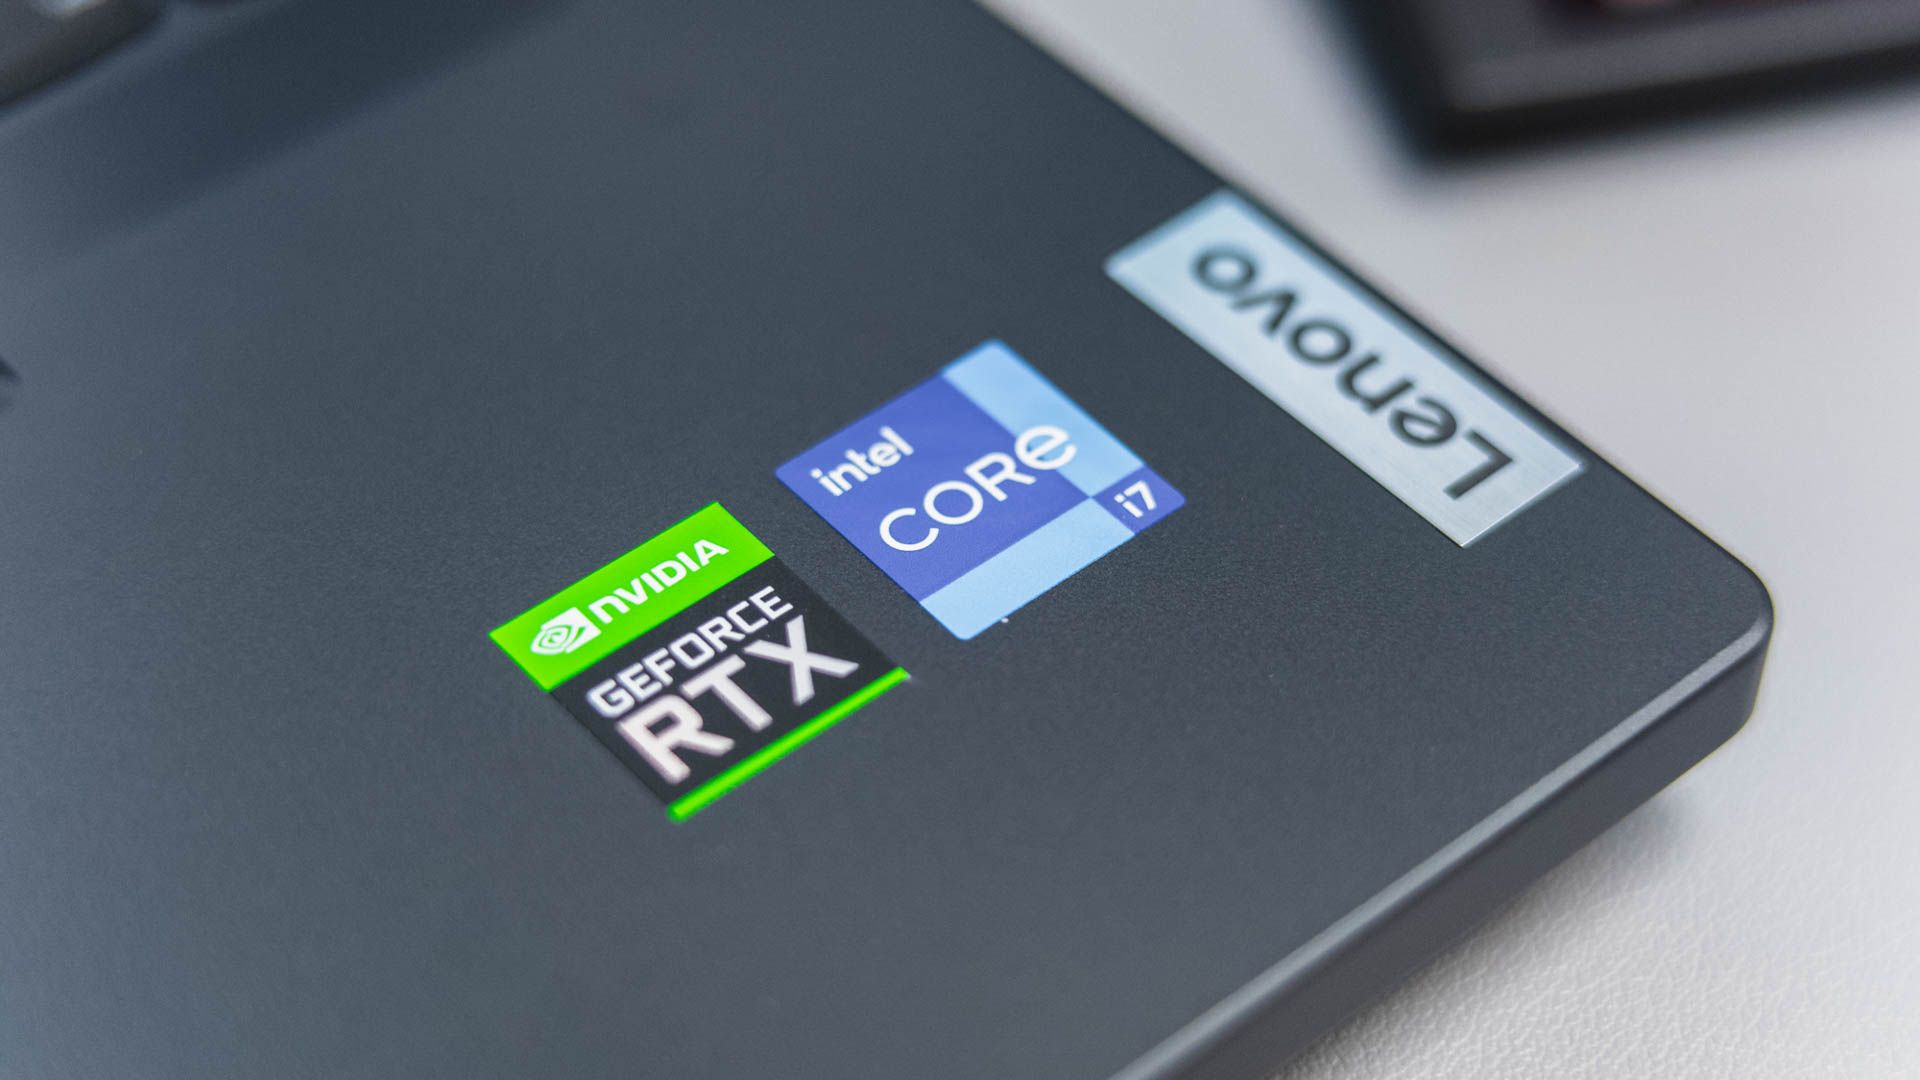 A GeForce RTX sticker on a laptop.